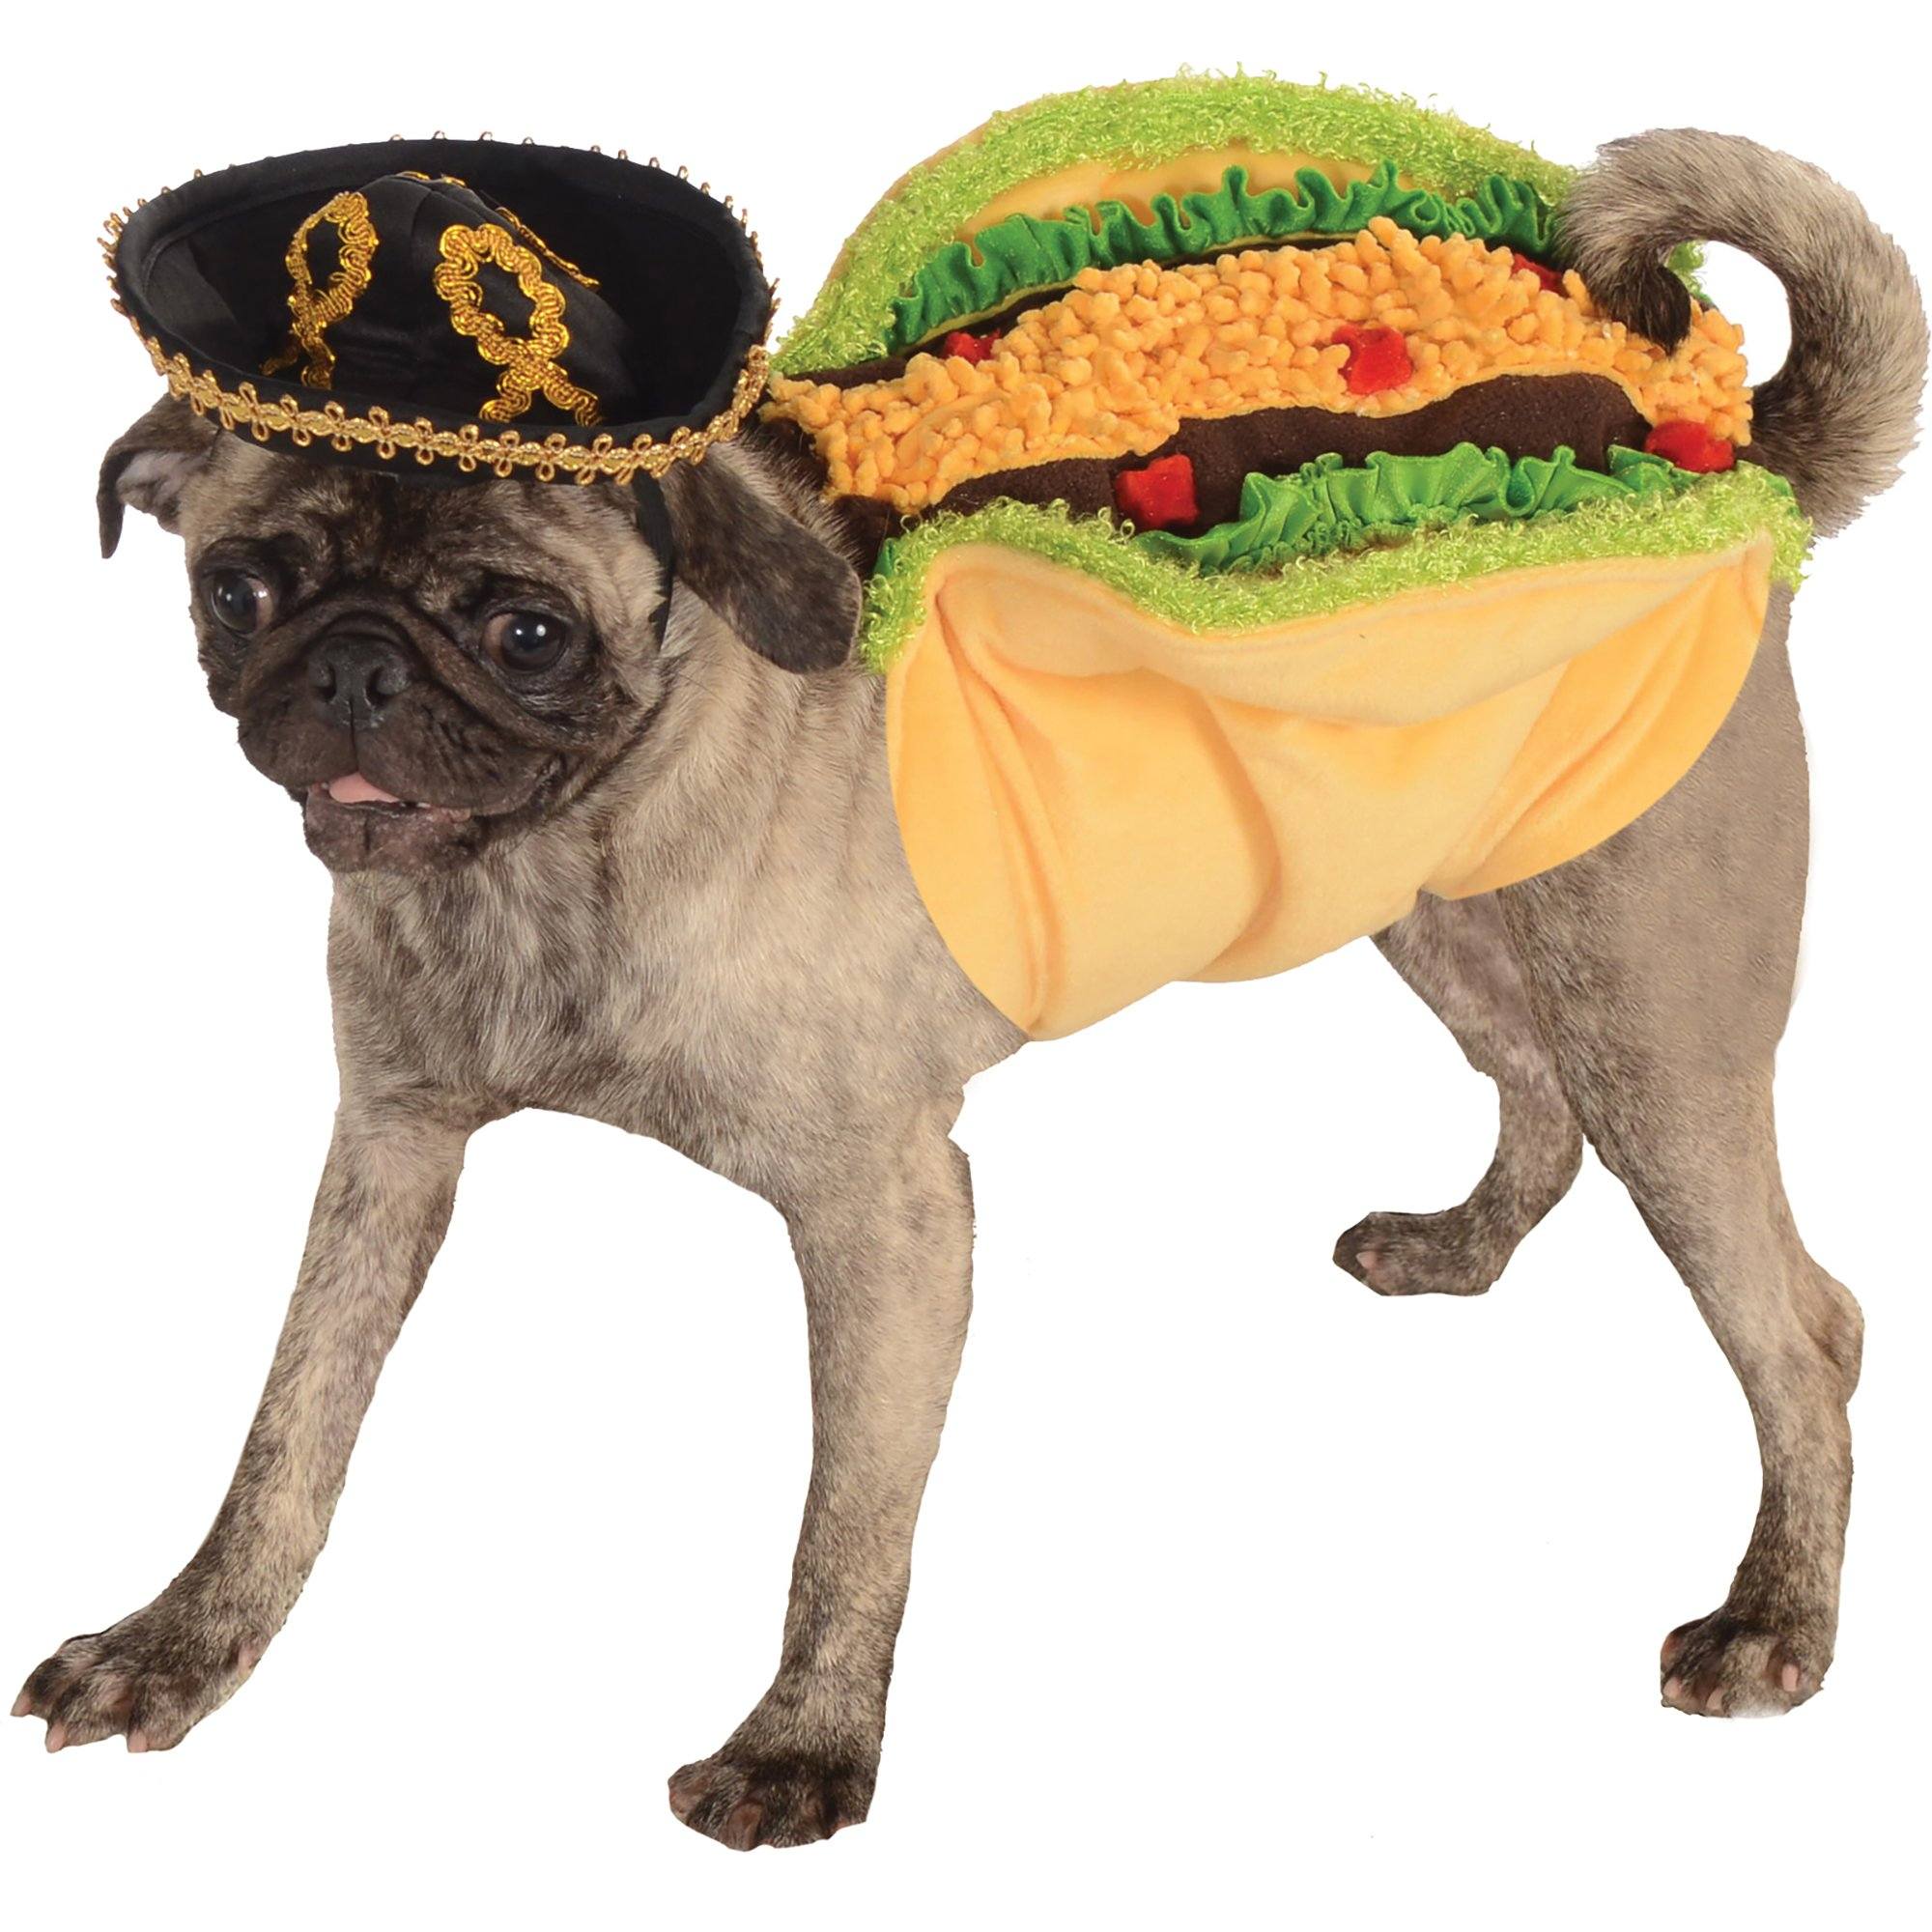 Taco Pet Costume - XL